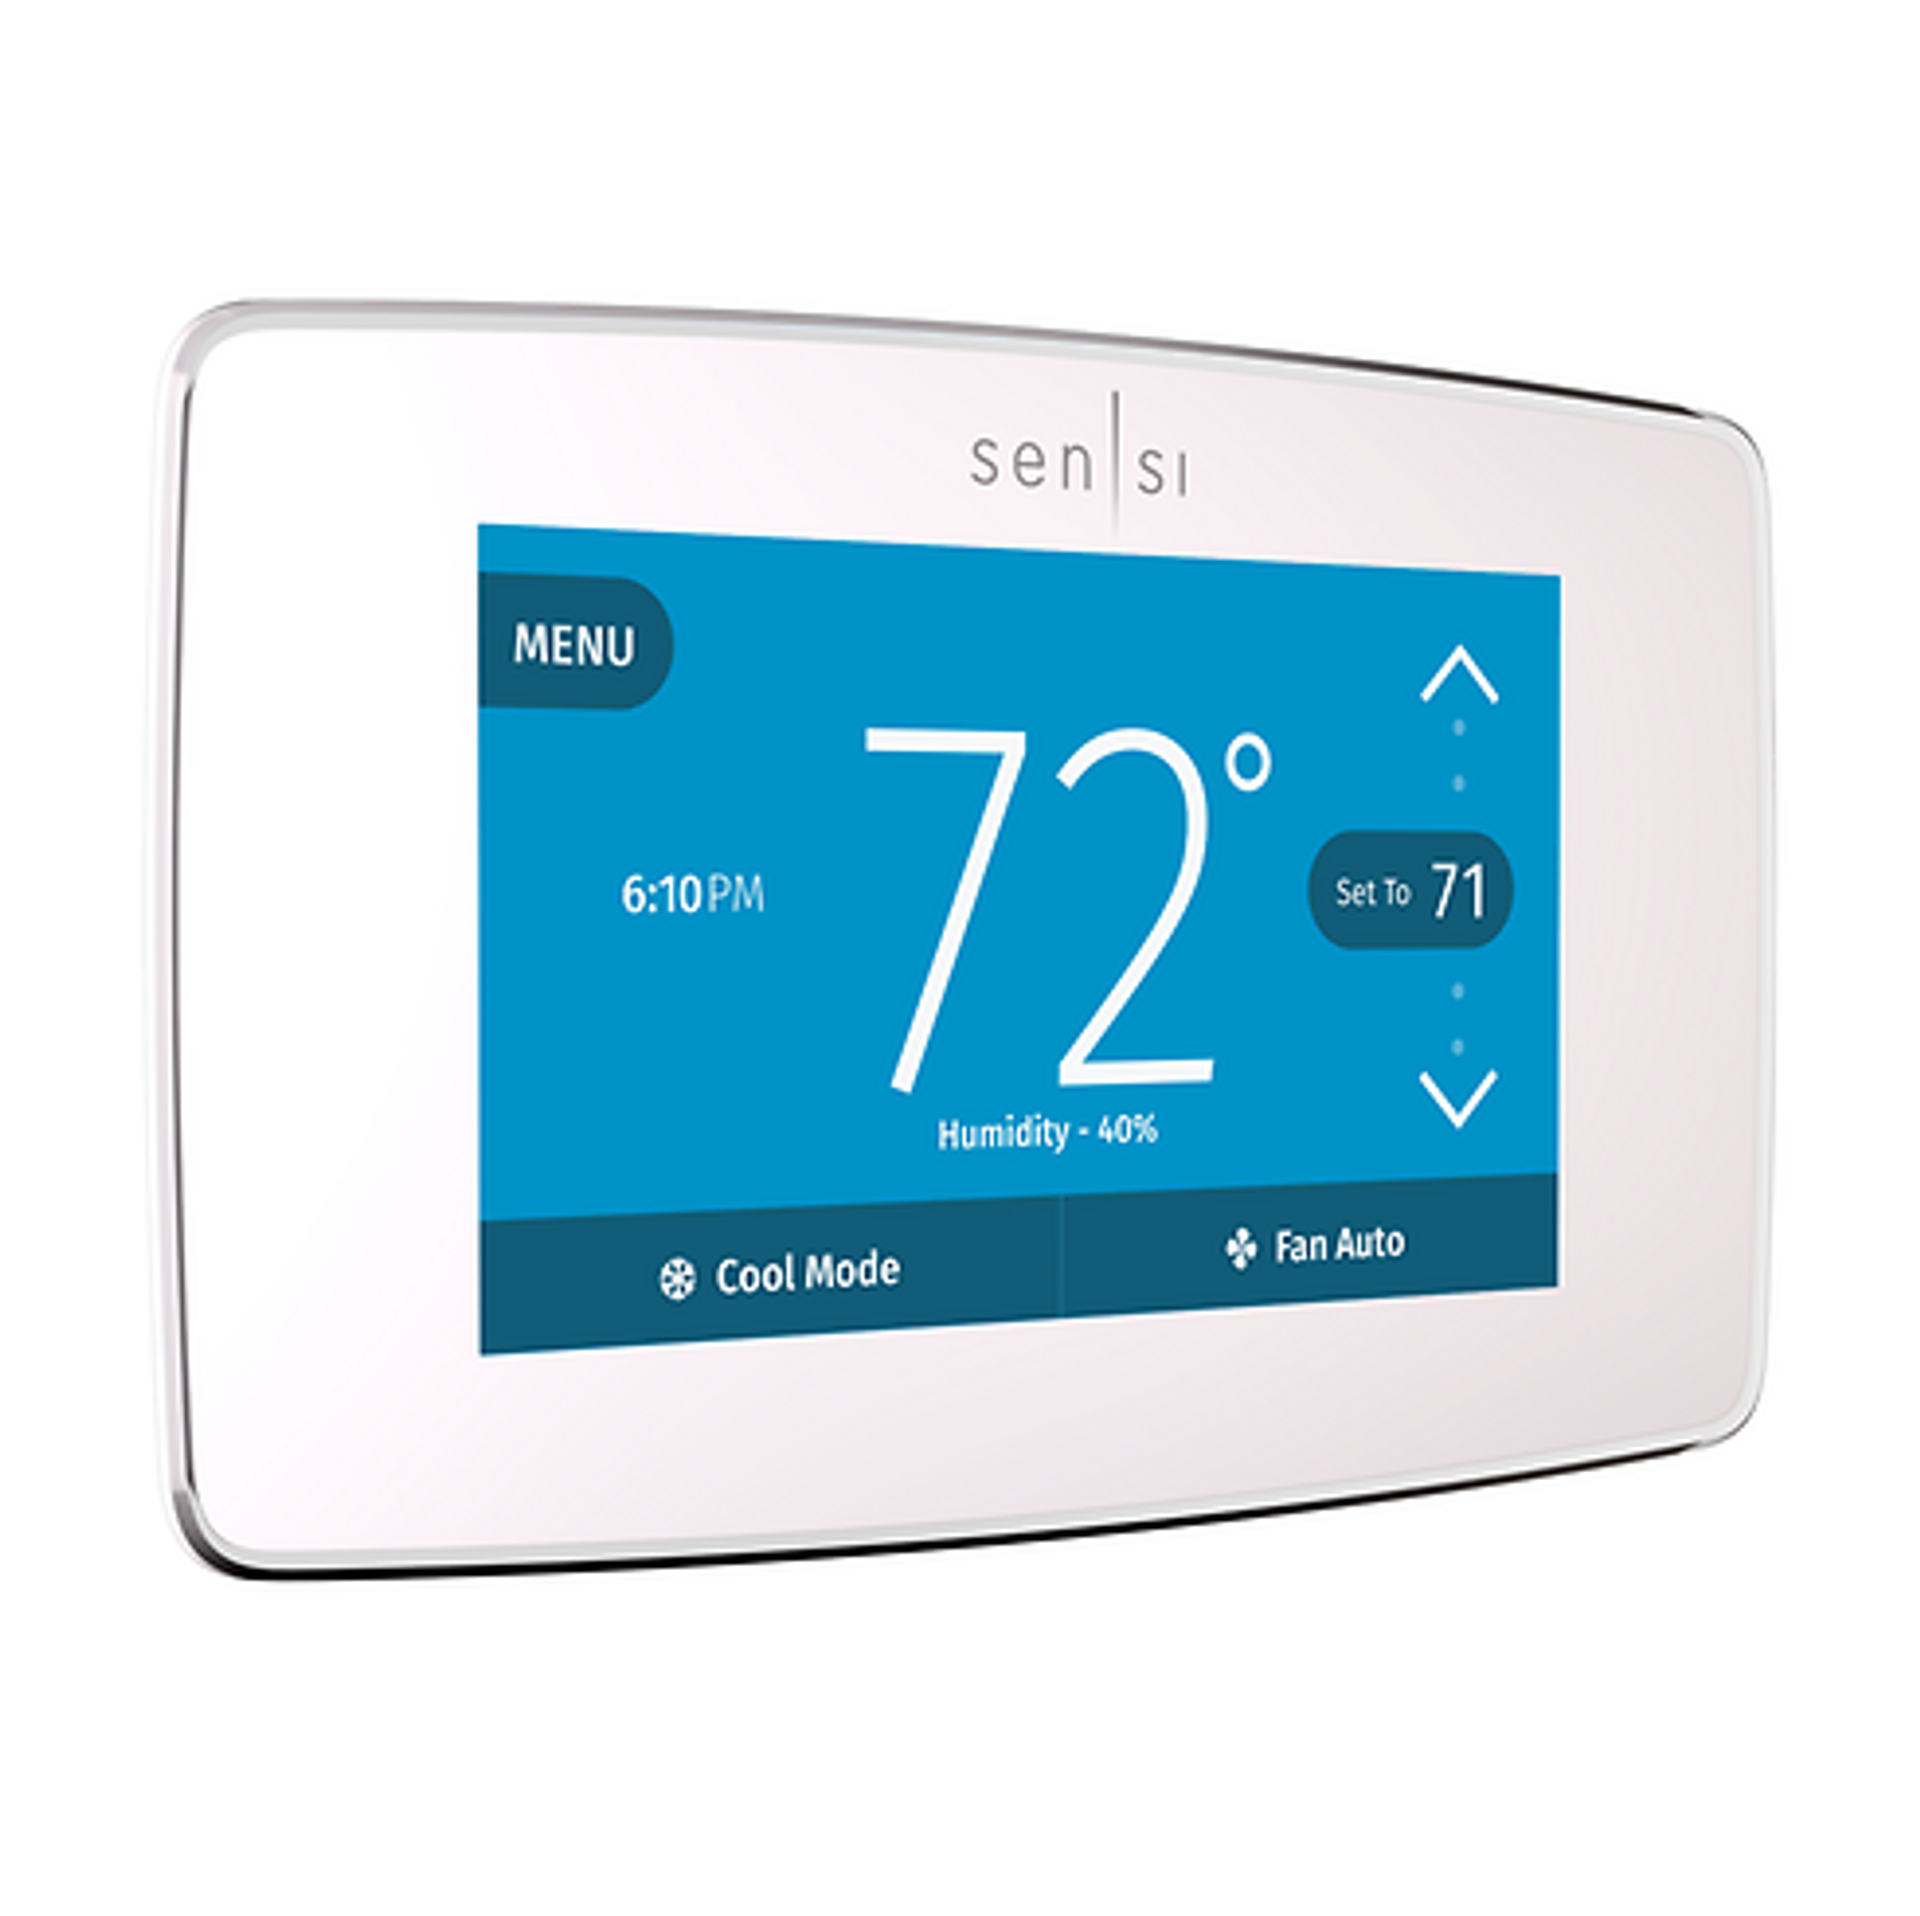 sensi-thermostat-troubleshooting